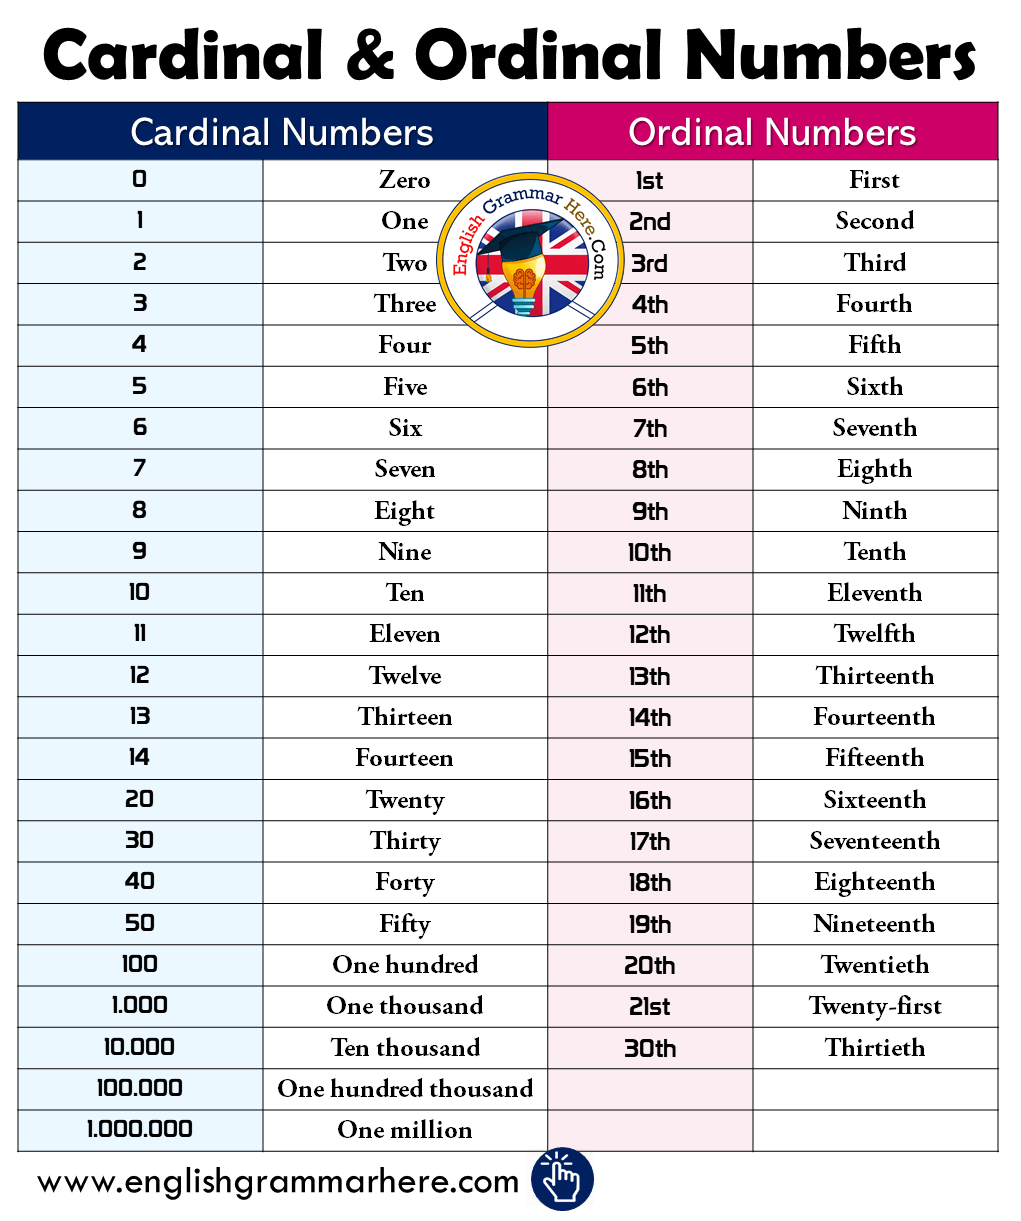 Cardinal & Ordinal Numbers in English